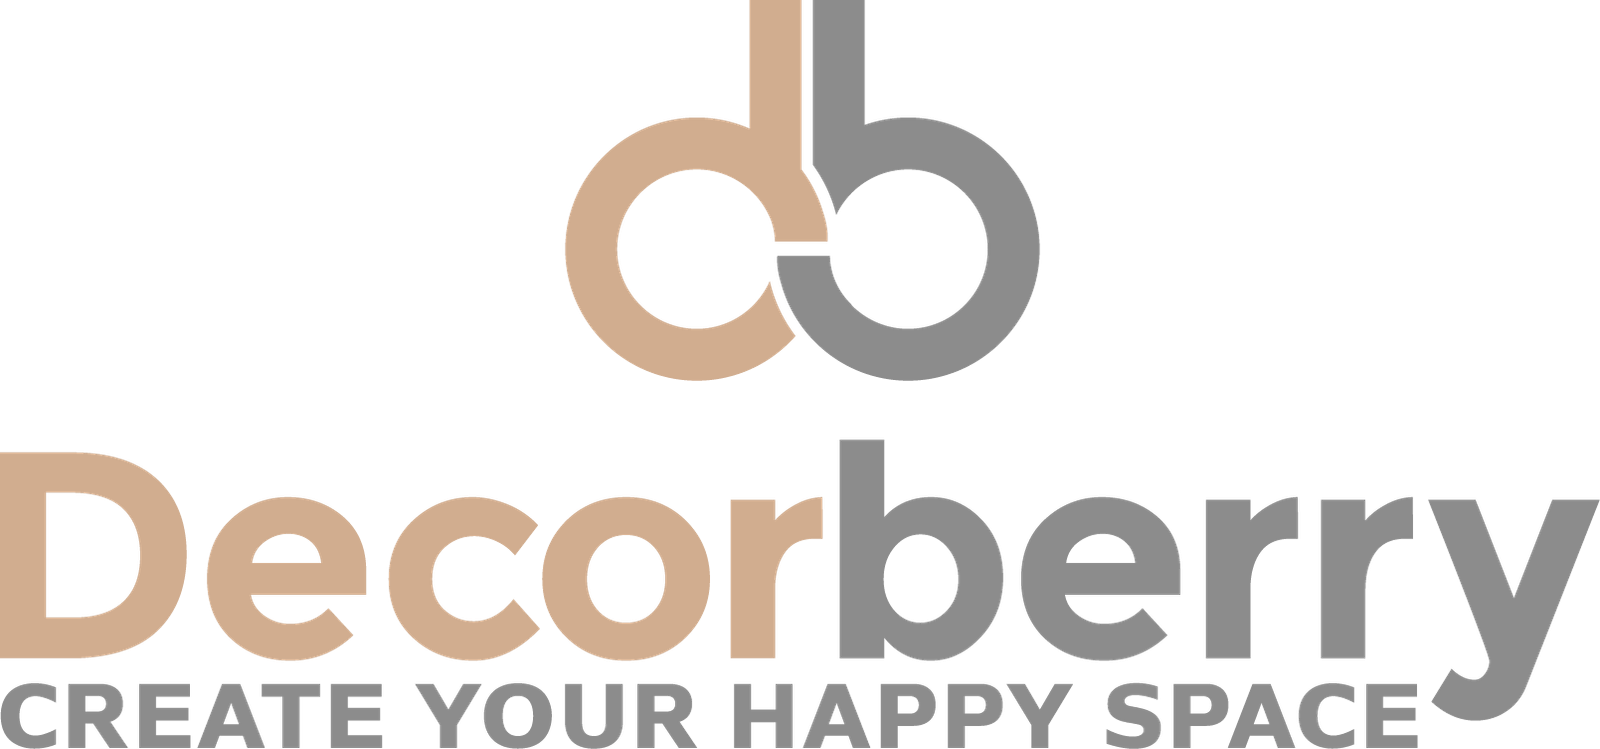 Decorberry - Create Your Happy Space